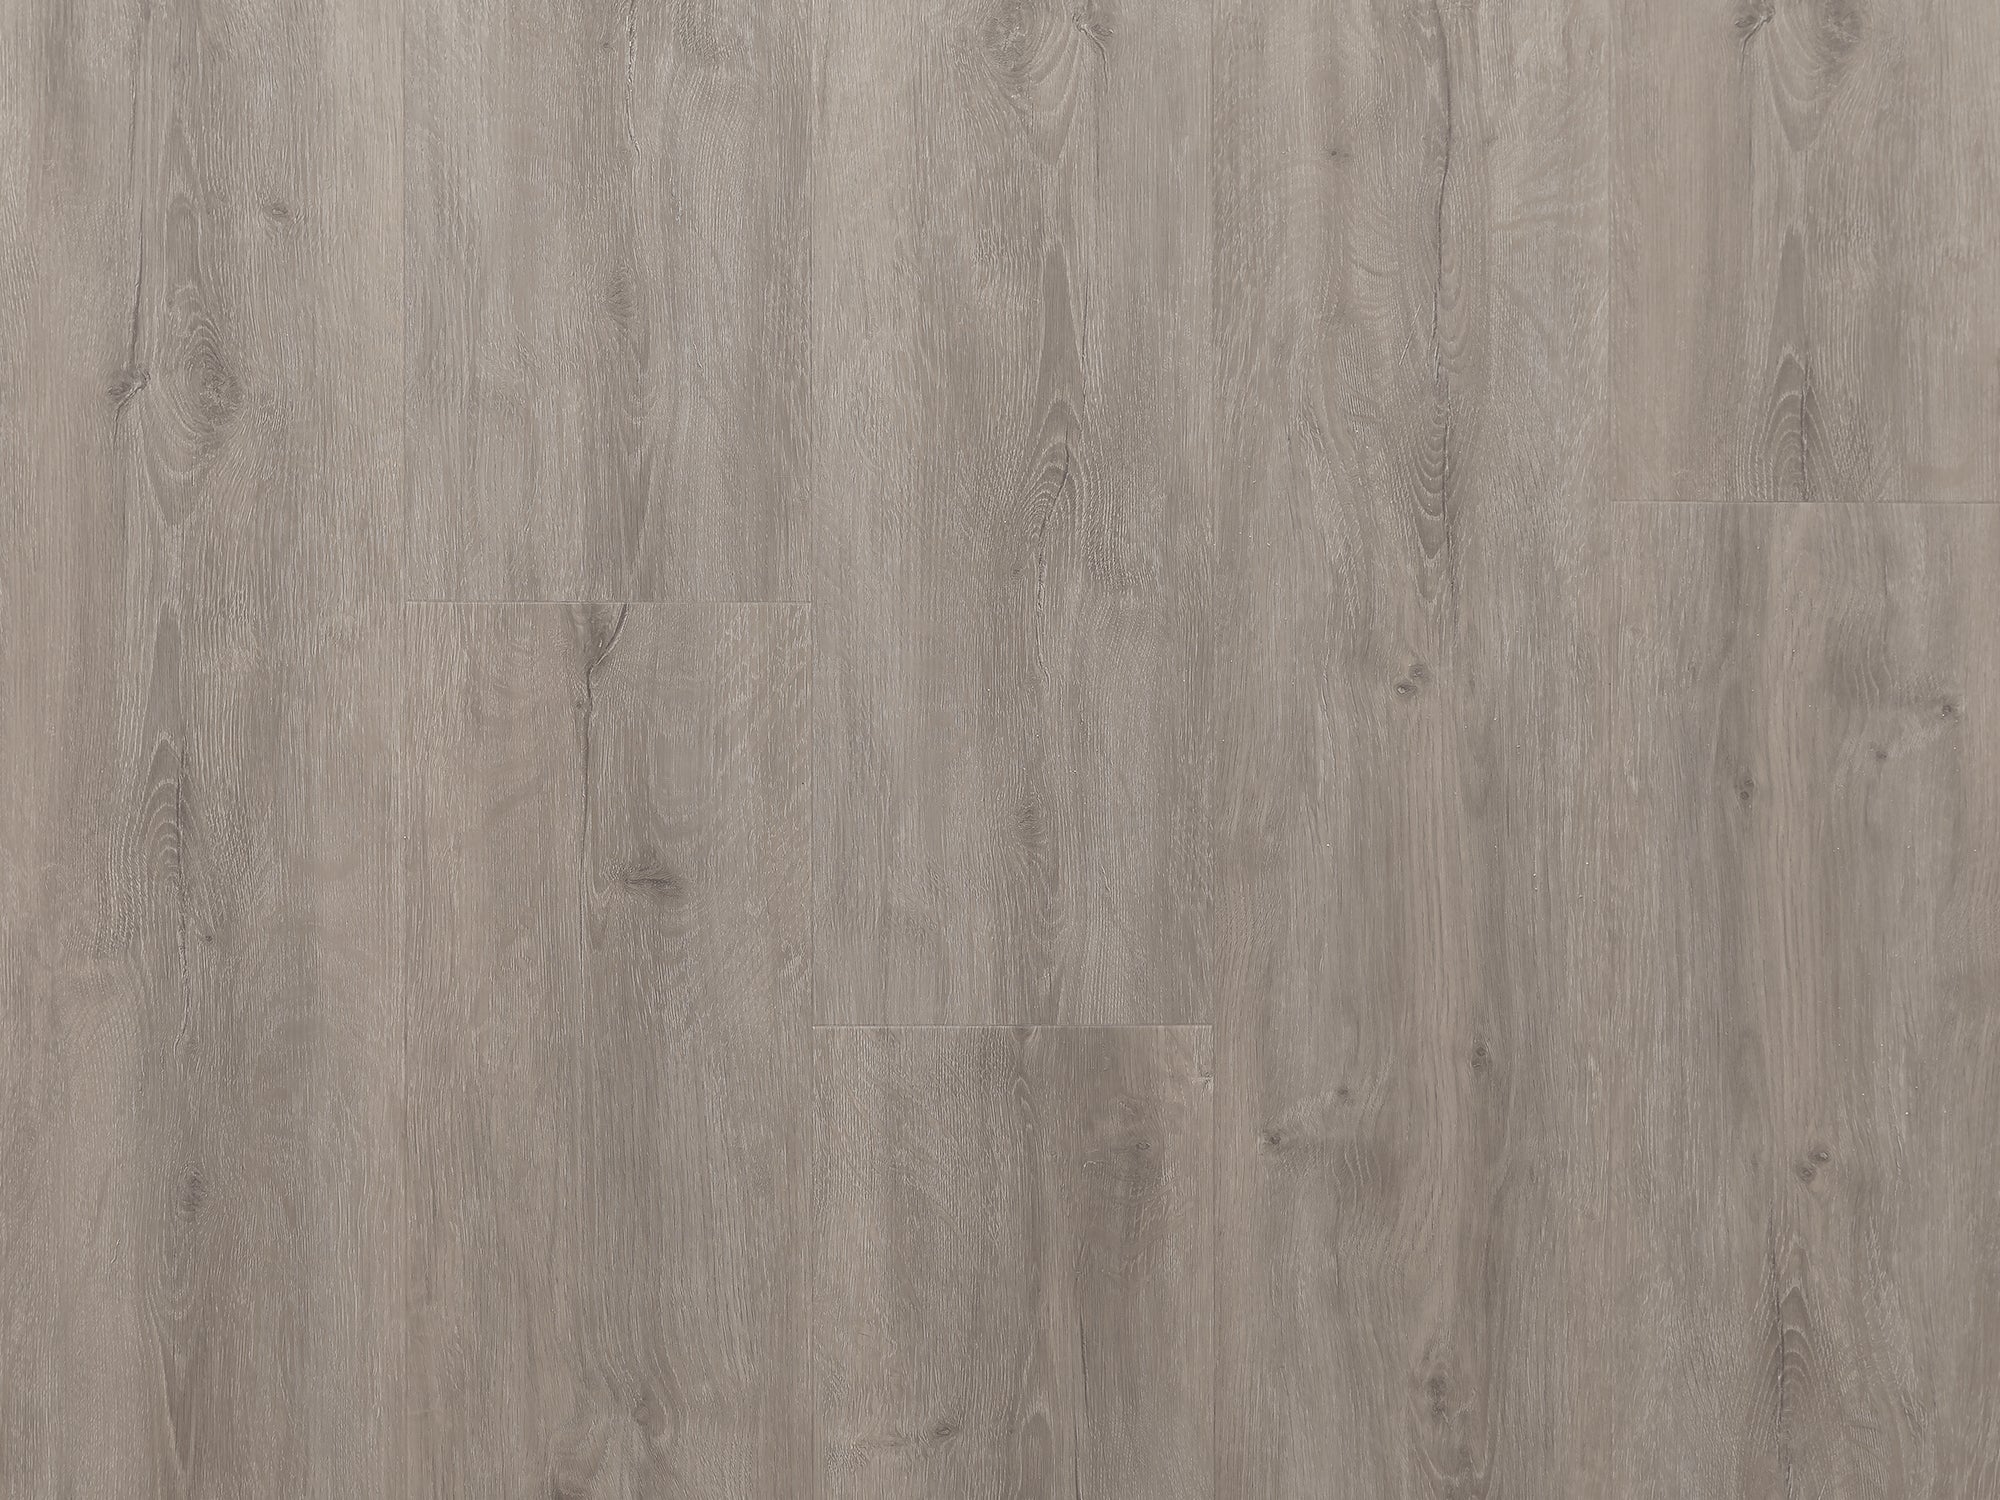 Stone Composite LVP Flooring - Grey Oak